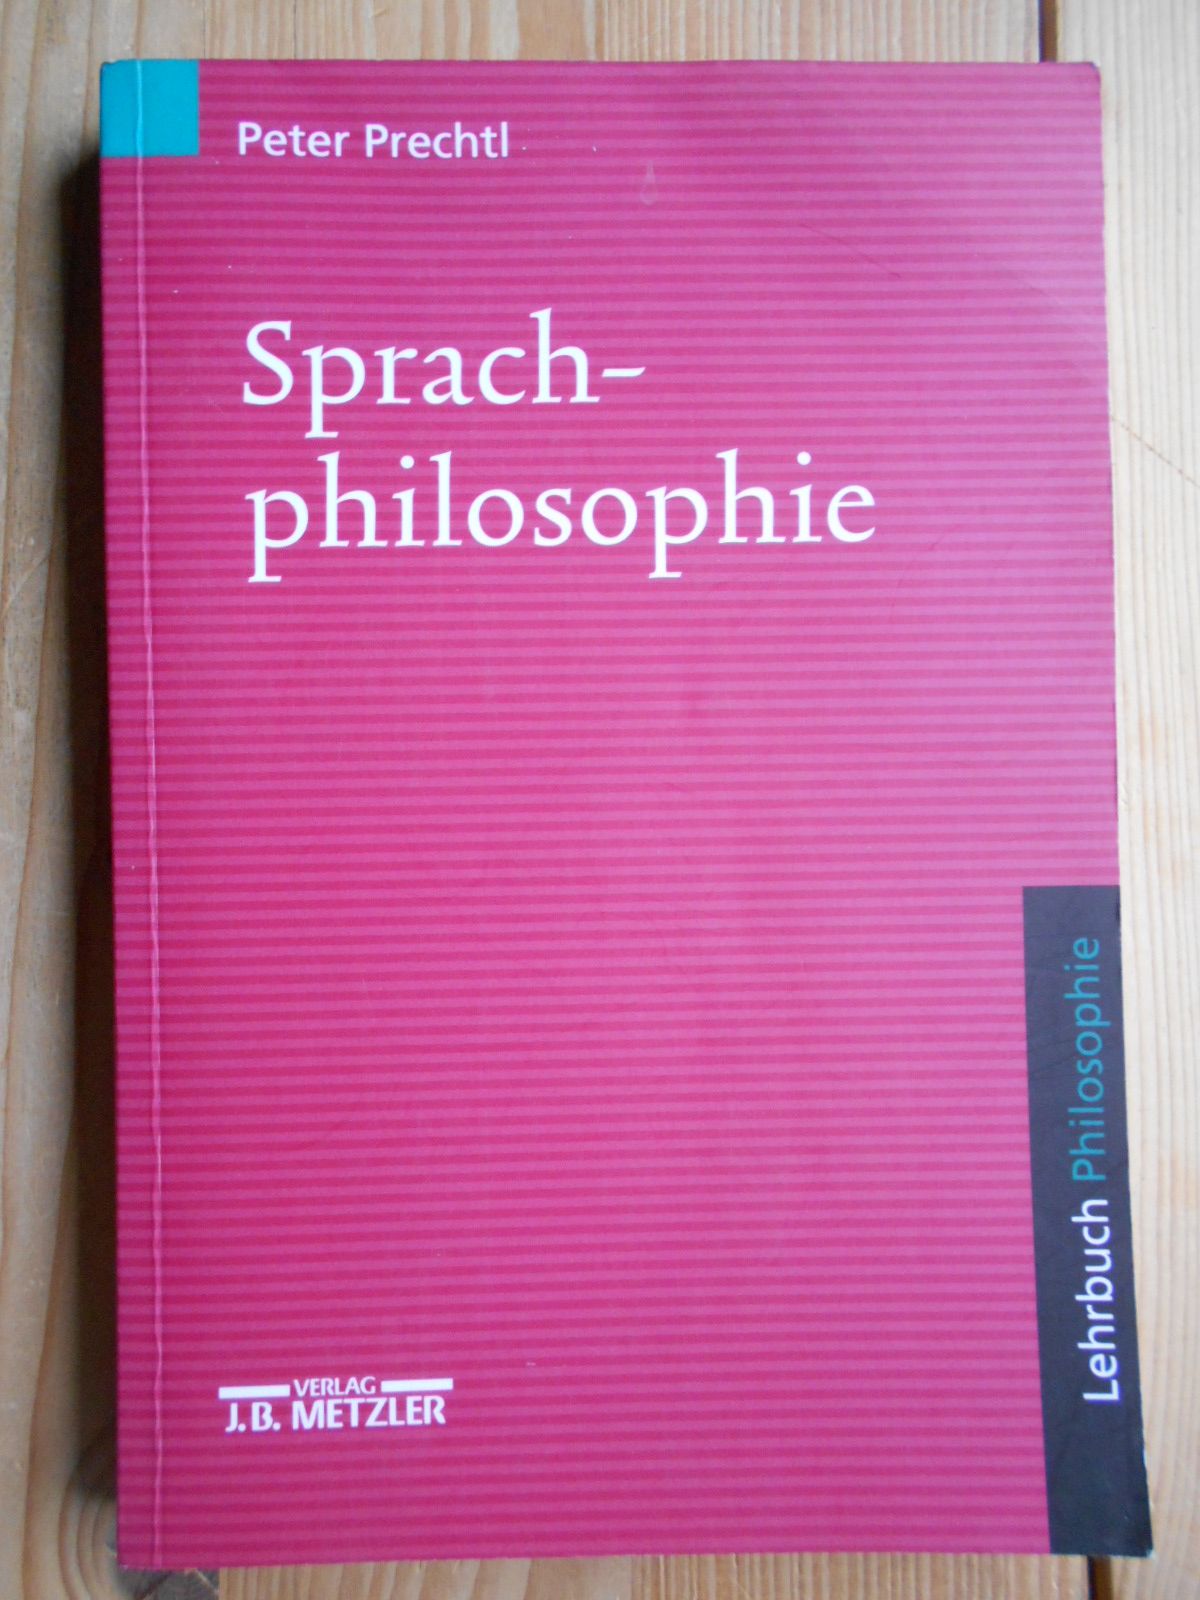 Sprachphilosophie : Lehrbuch Philosophie. Lehrbuch Philosophie - Prechtl, Peter